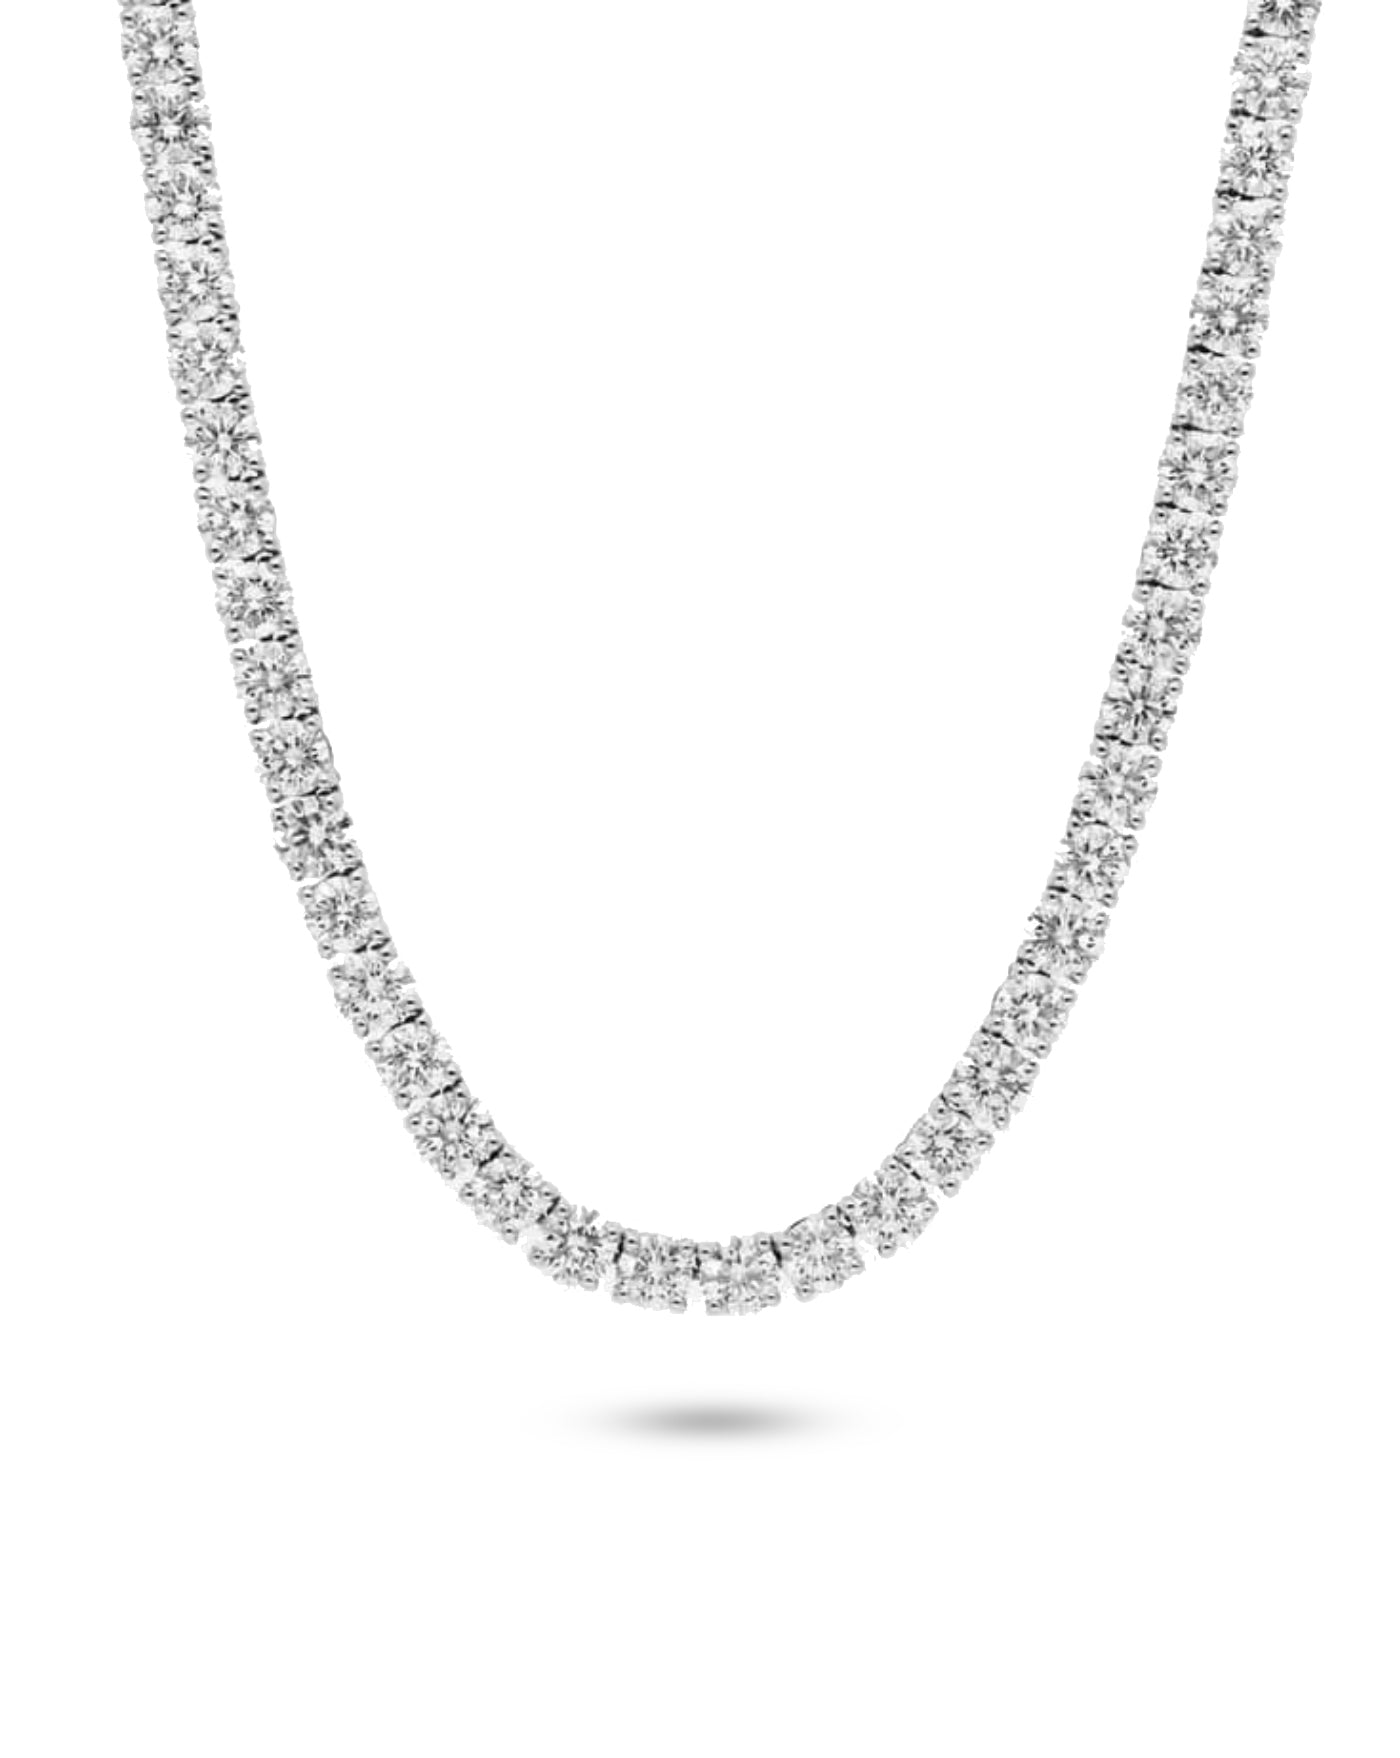 10 carat Tennis Necklace | Round Cut LAB diamond